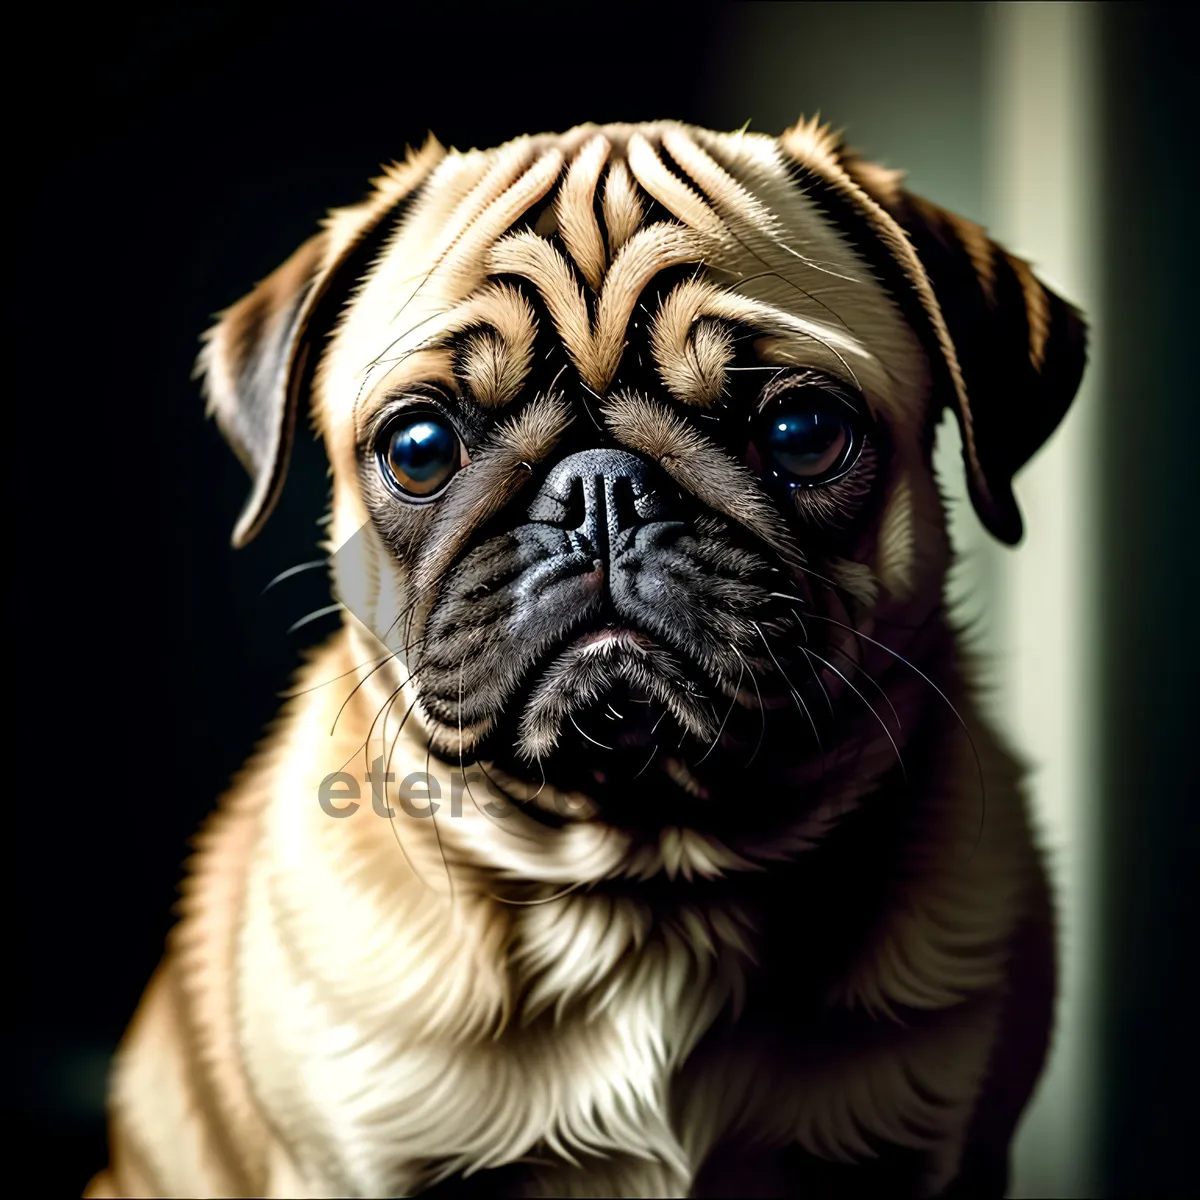 Picture of Adorable Pug Bull: Cute Studio Portrait of Purebred Canine